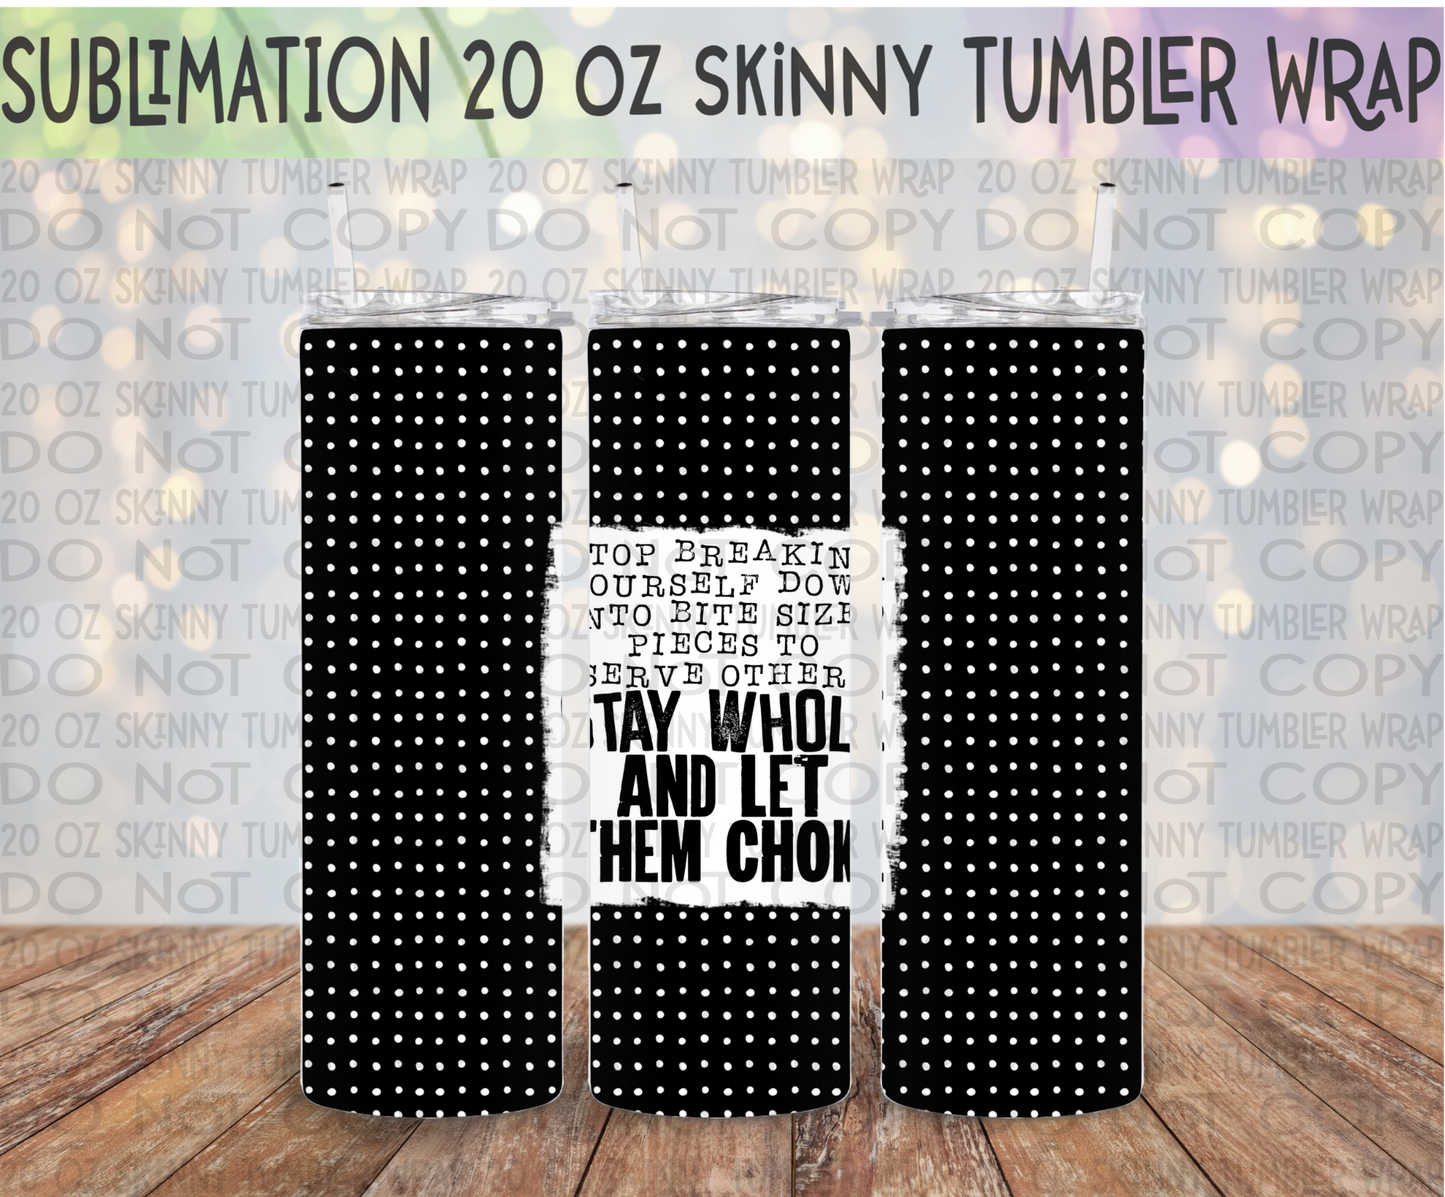 Stay Whole & Let Them Choke 20 Oz Skinny Tumbler Wrap - Sublimation Transfer - RTS